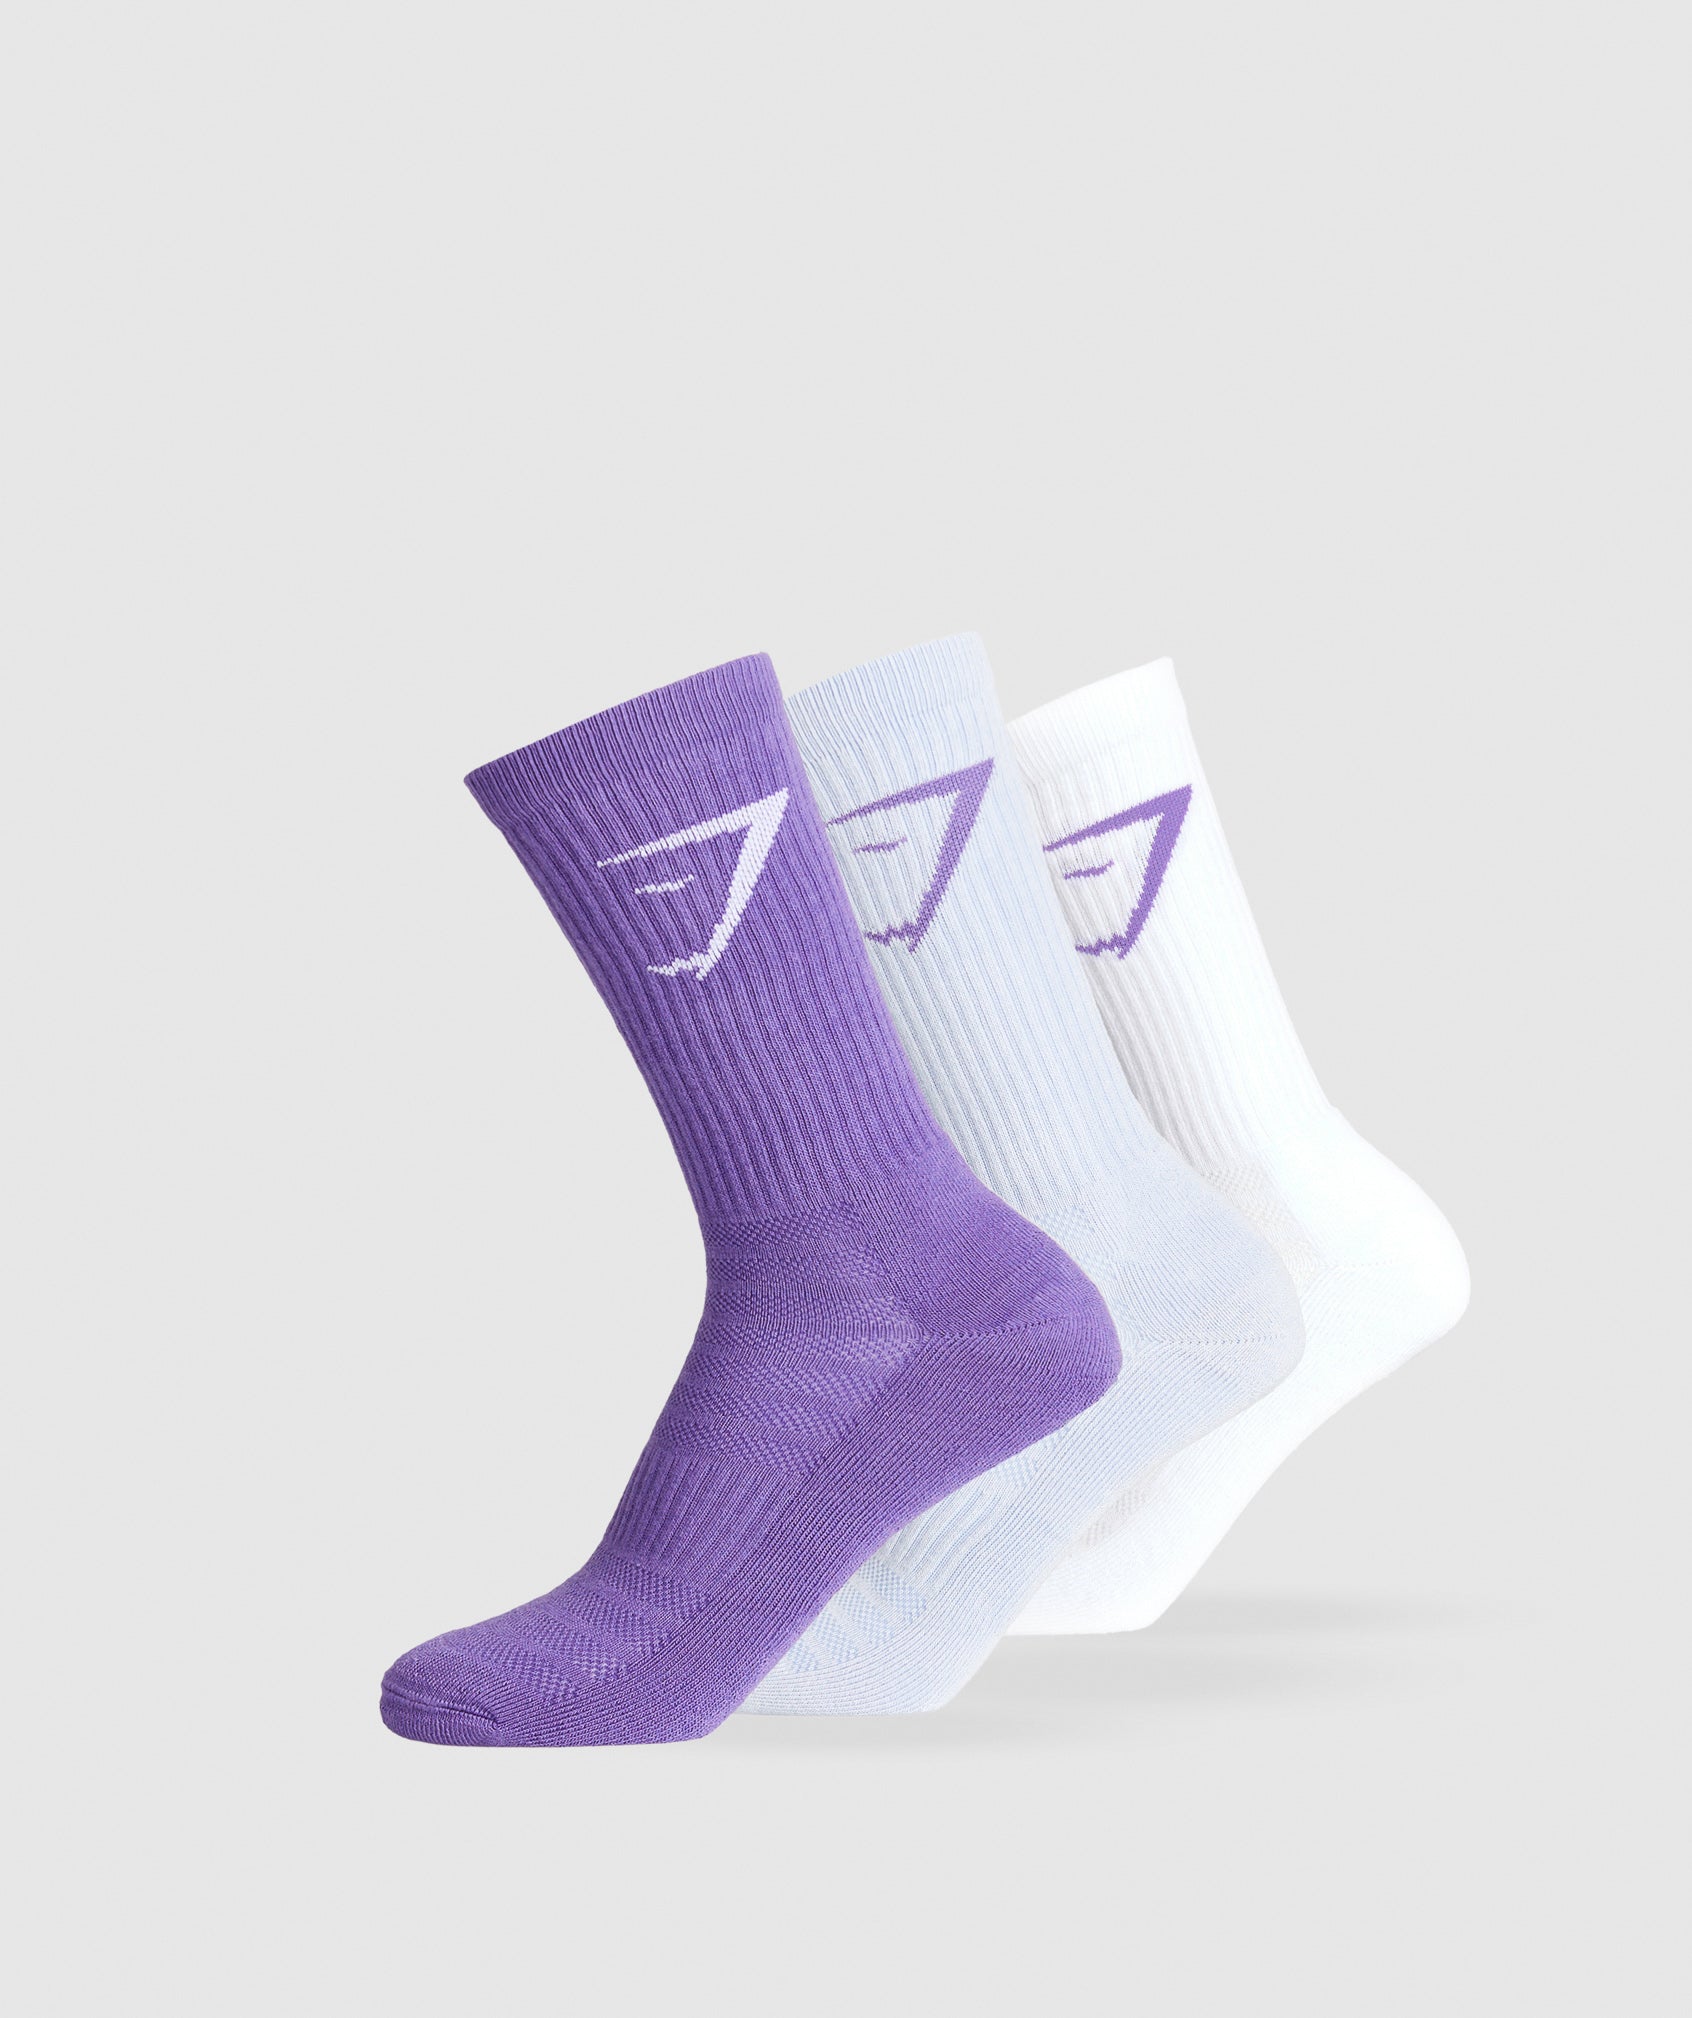 Crew Socks 3pk in Stellar Purple/Silver Lilac/White - view 1